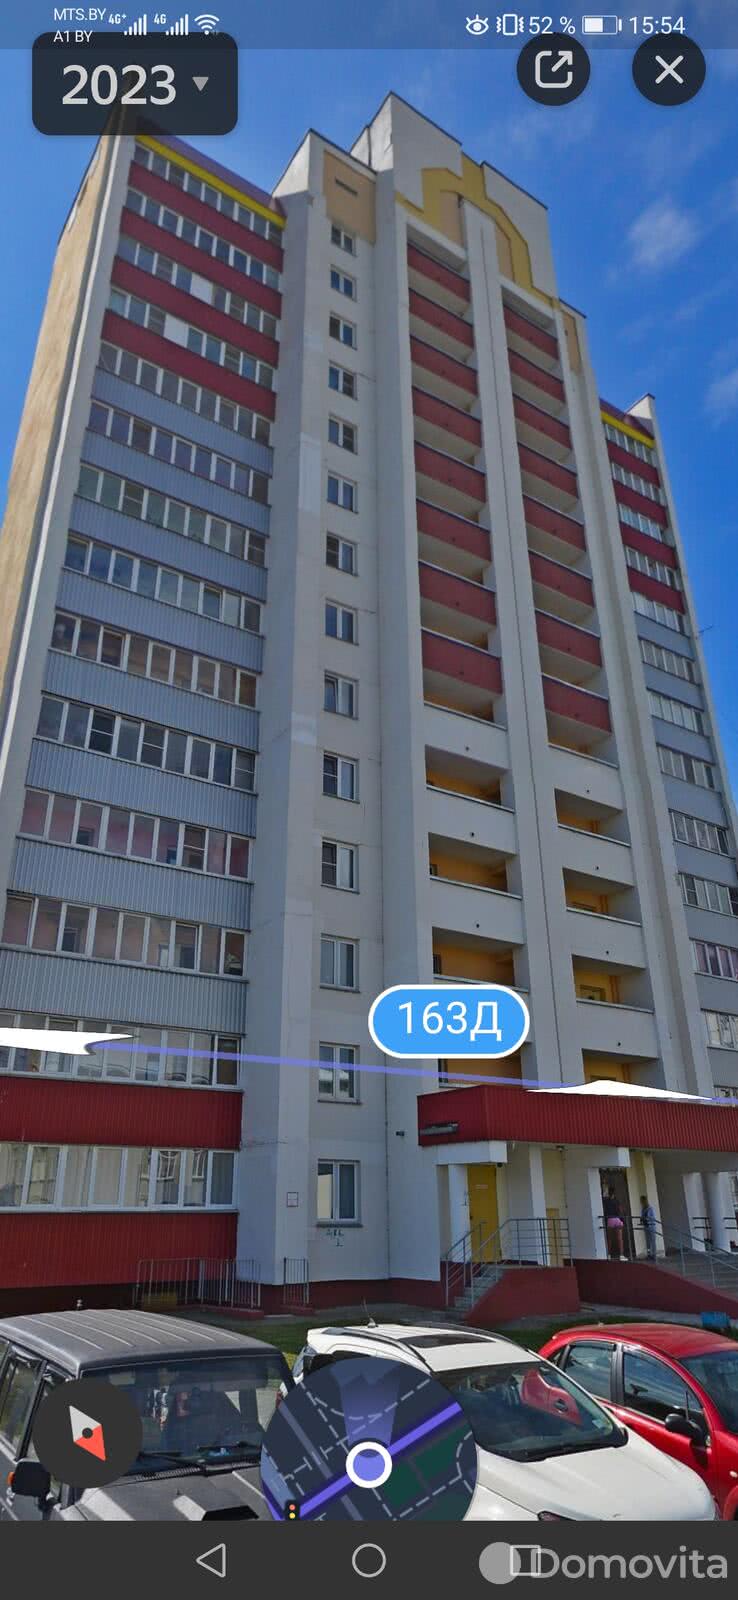 Цена продажи квартиры, Гомель, ул. Ильича, д. 163Д